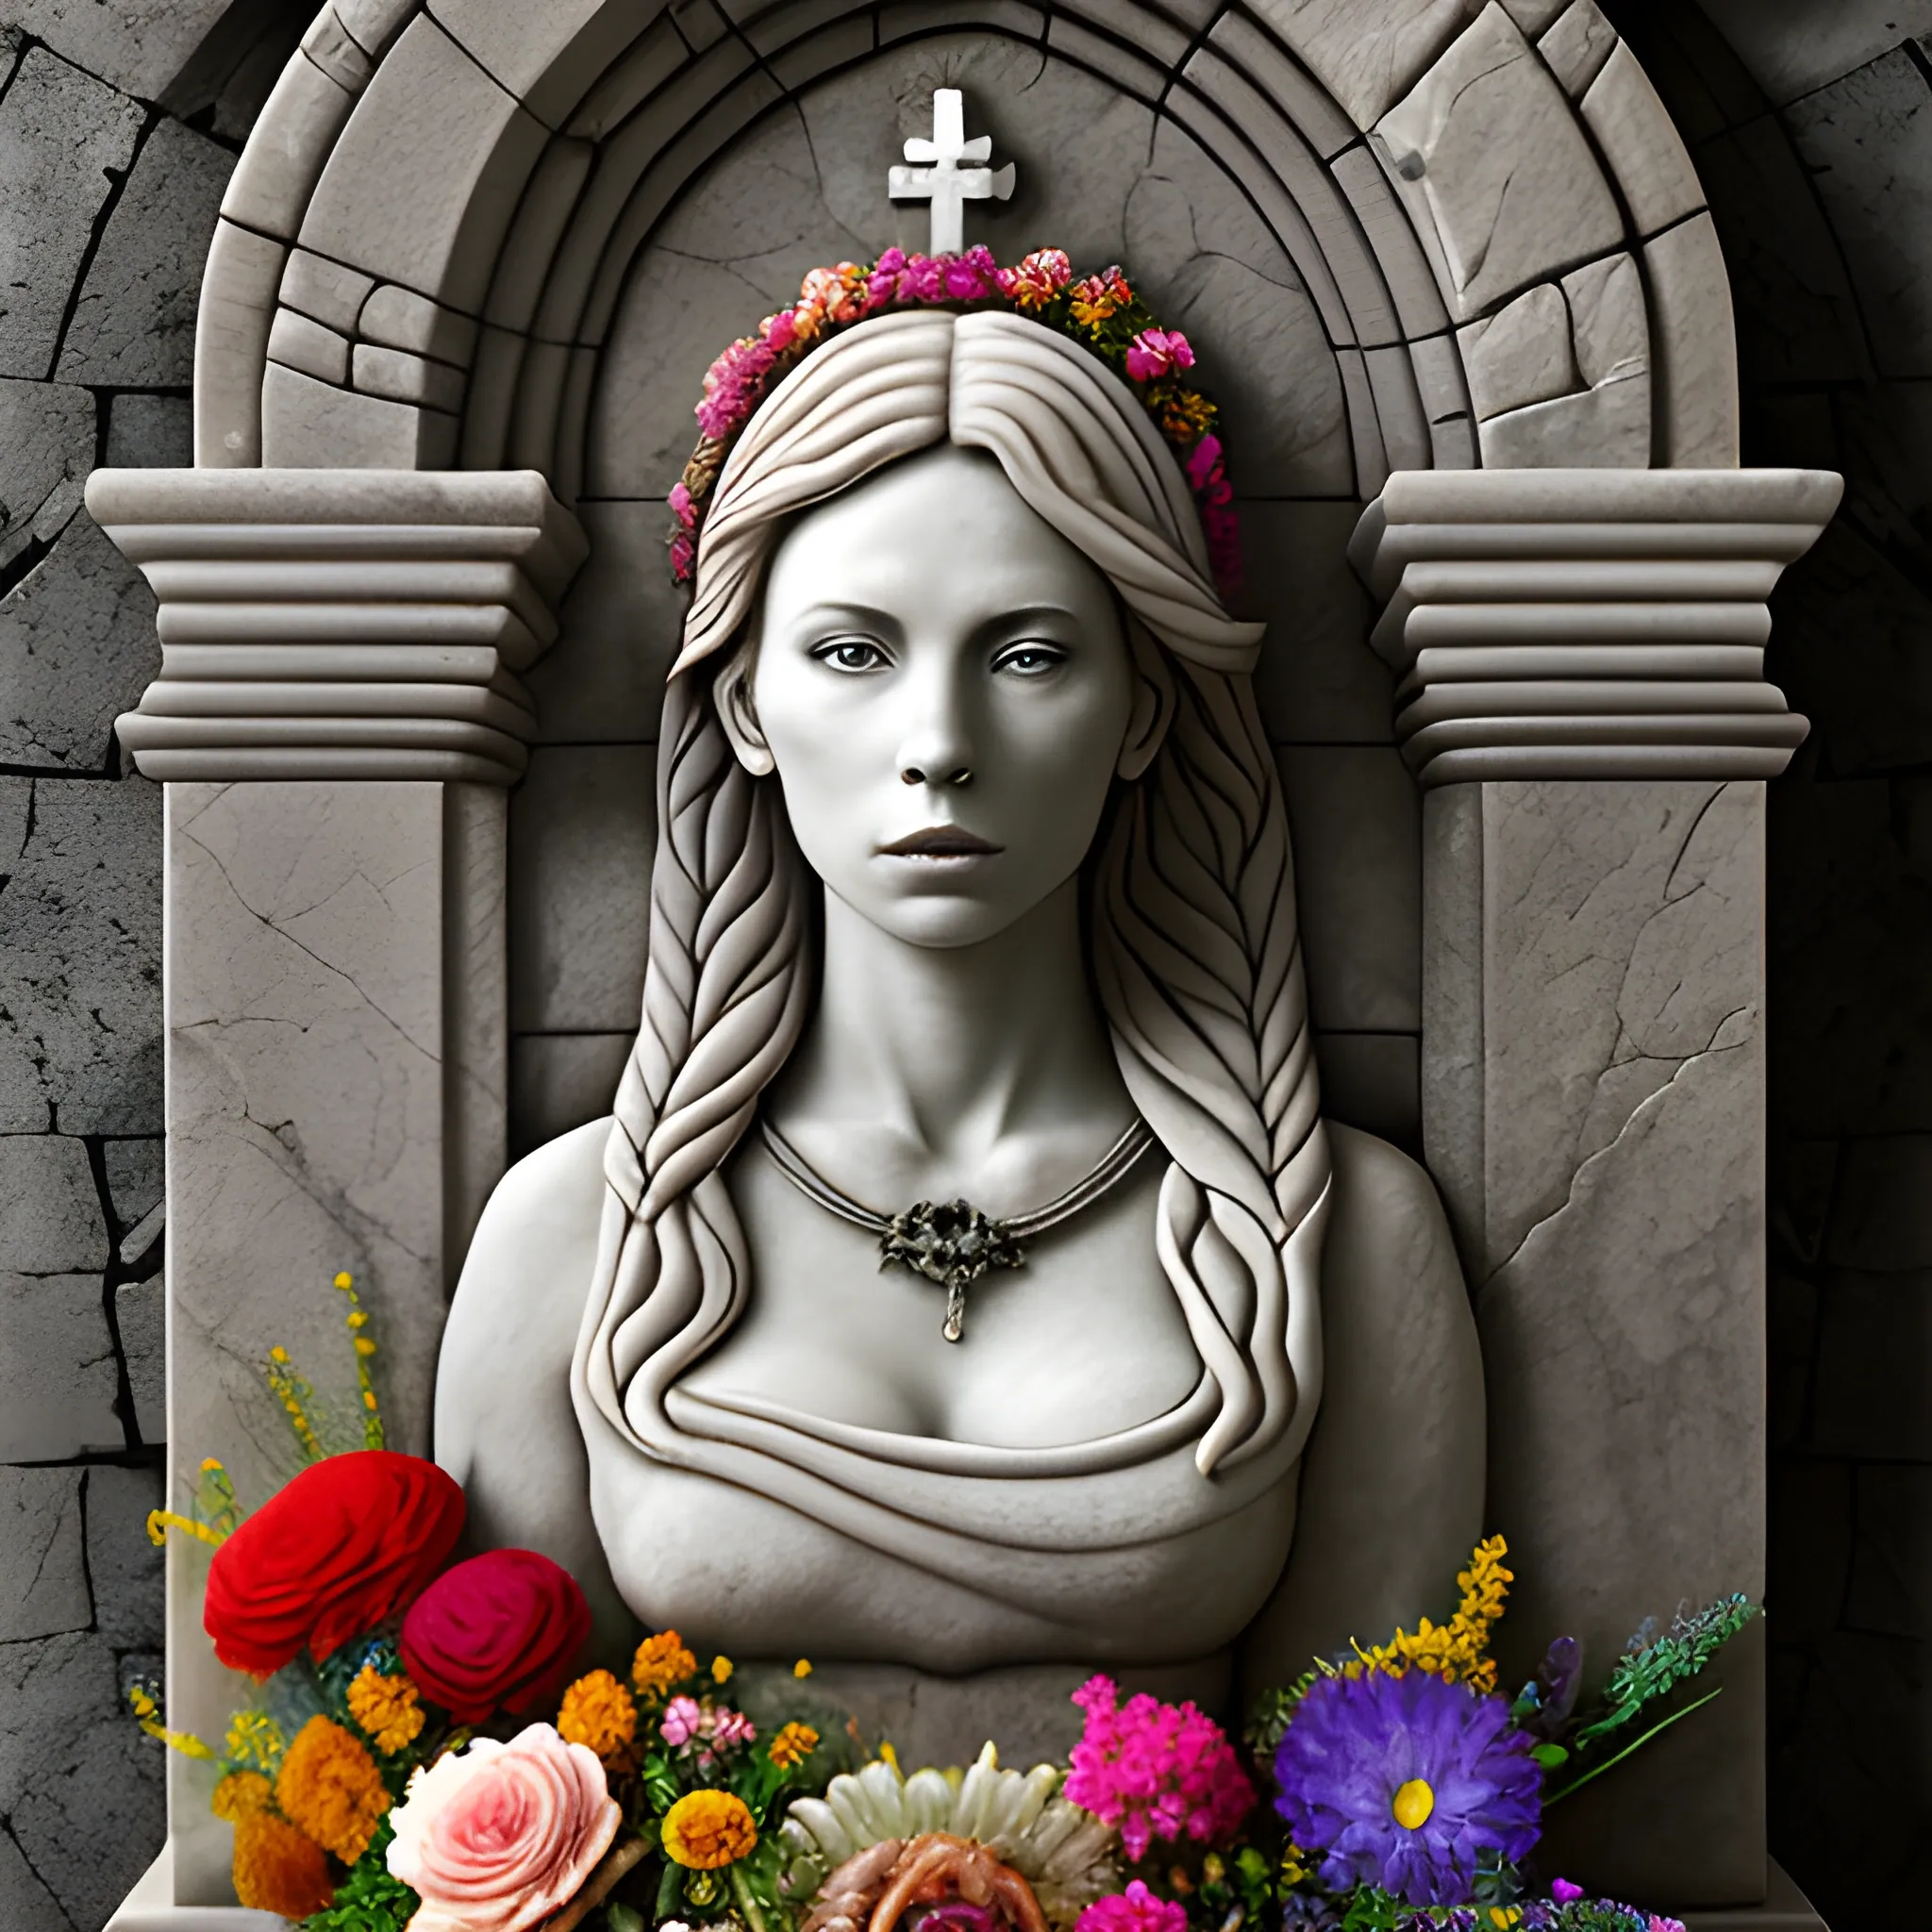 Female portrait in stone, altar, flowers, bold colors ,fantasy, Fashion, vitality